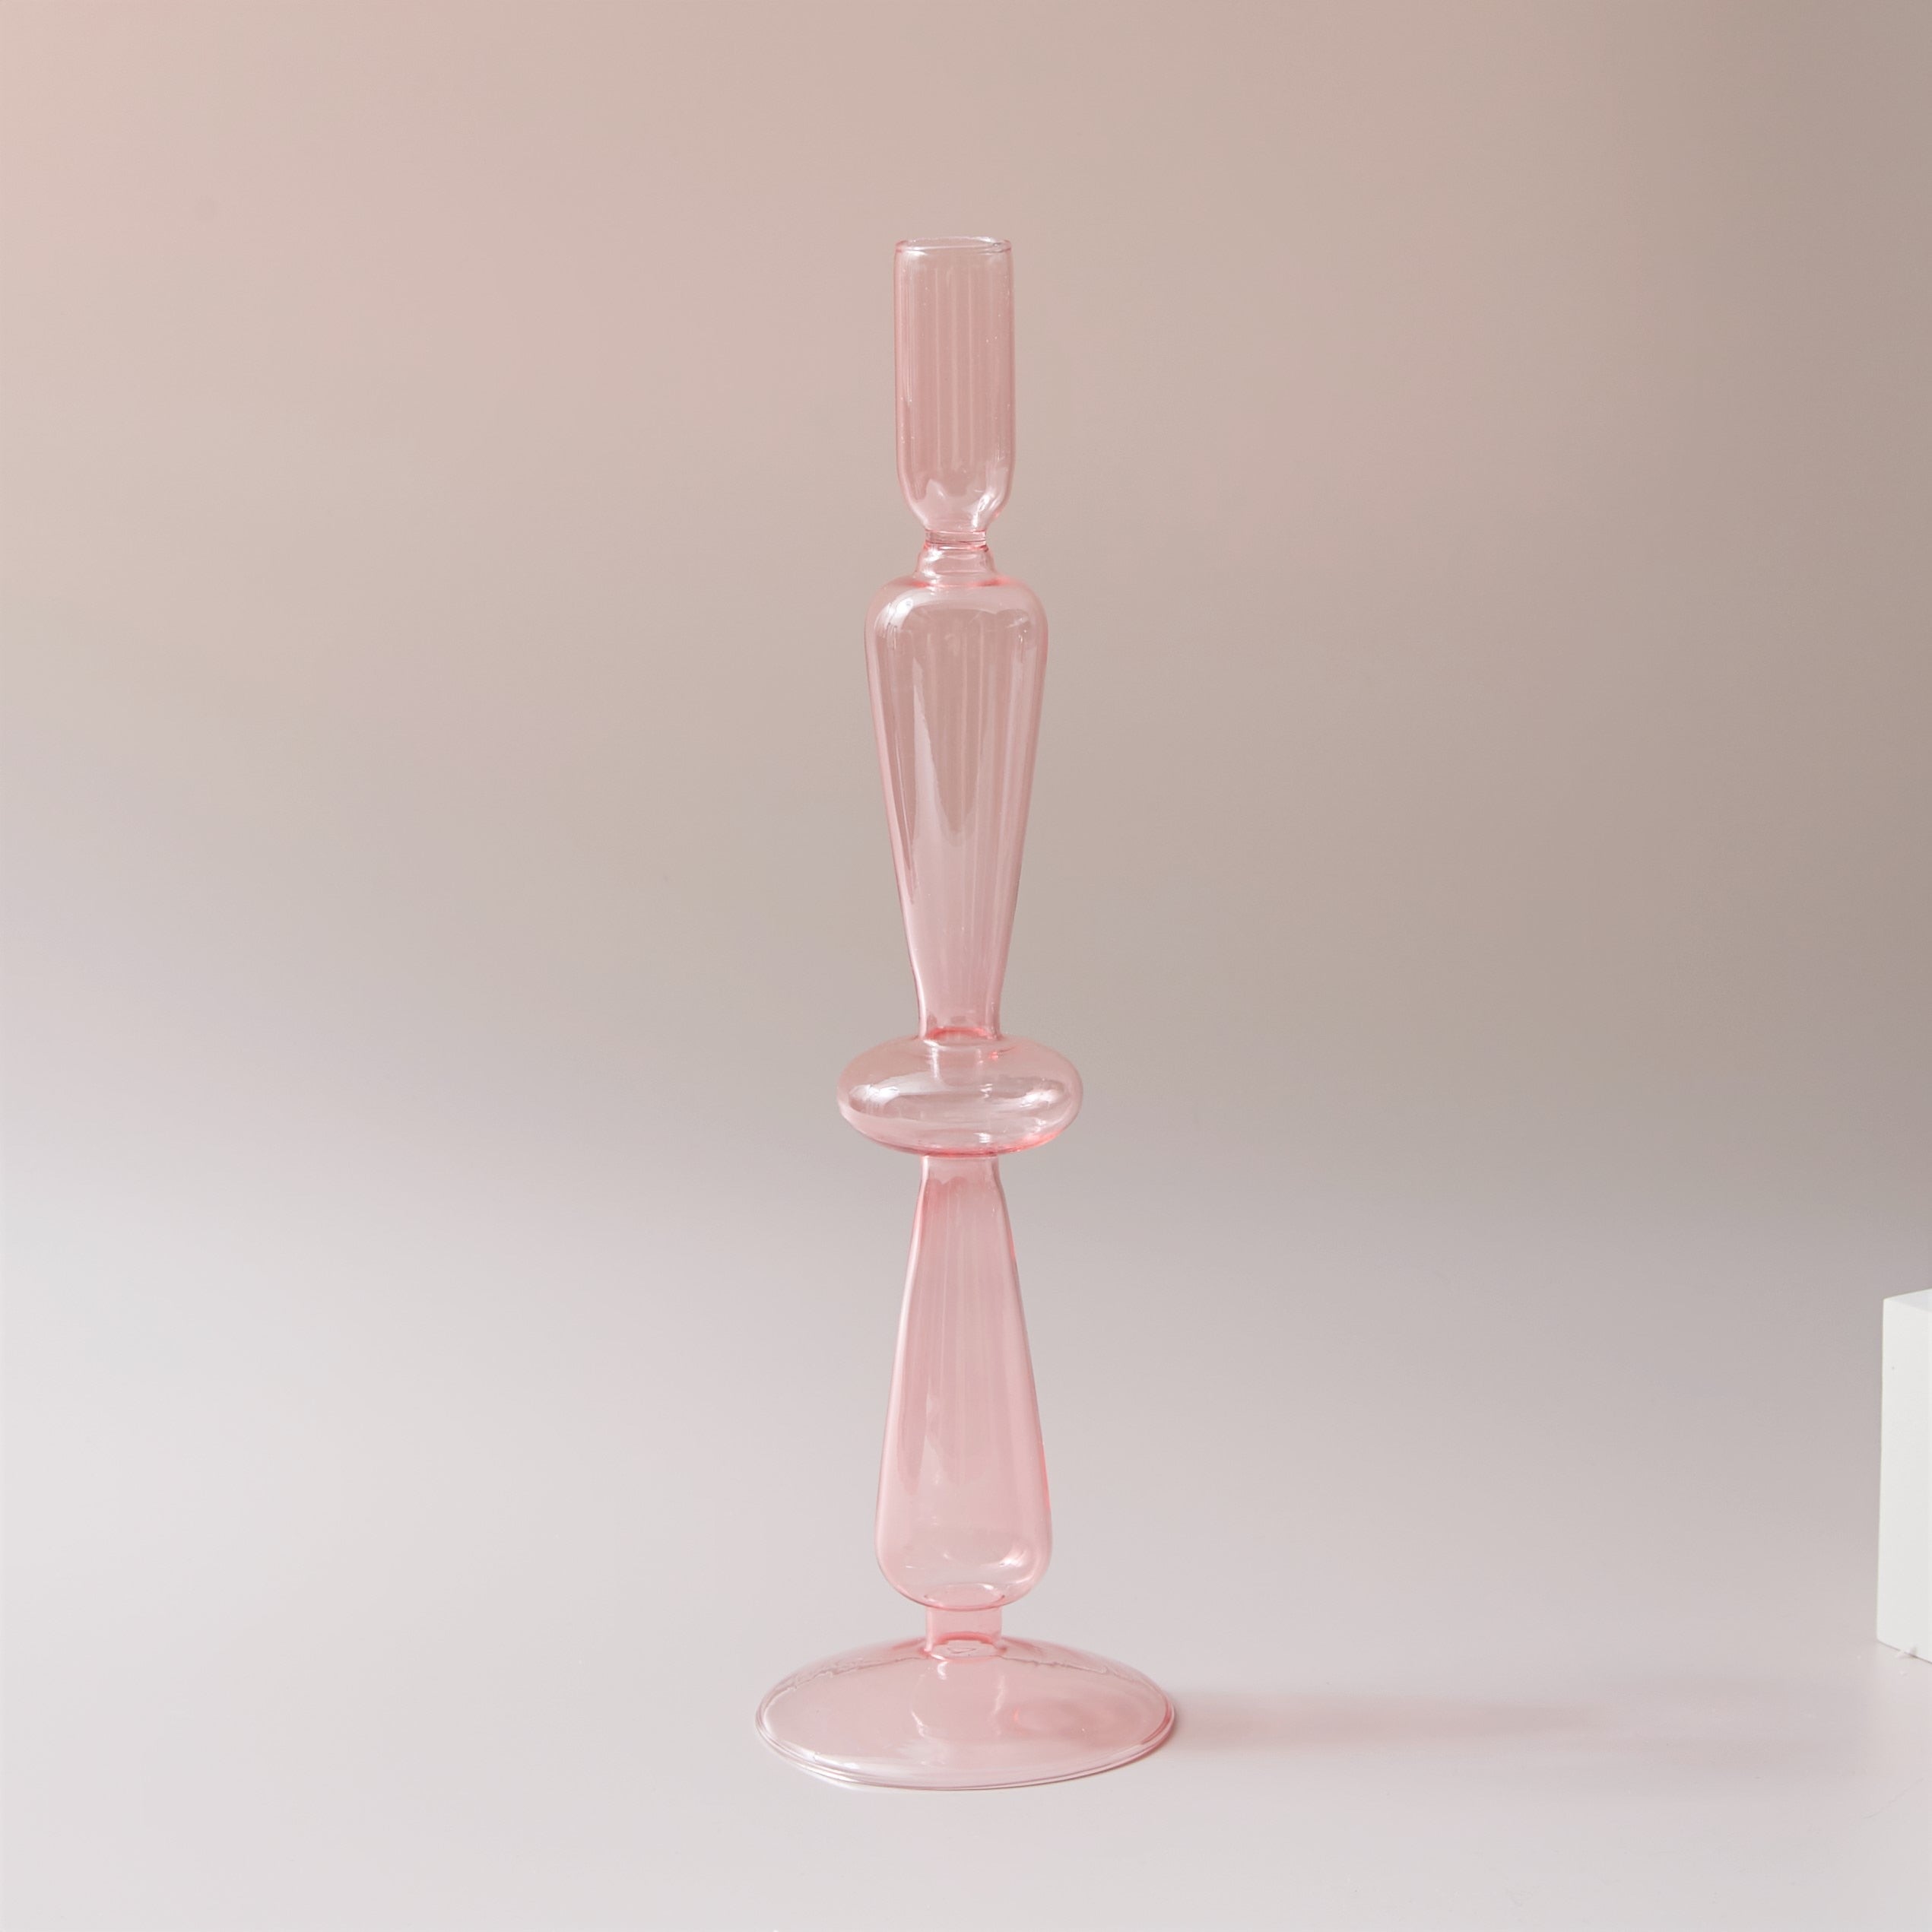 Handmade romantic vintage glass candlestick